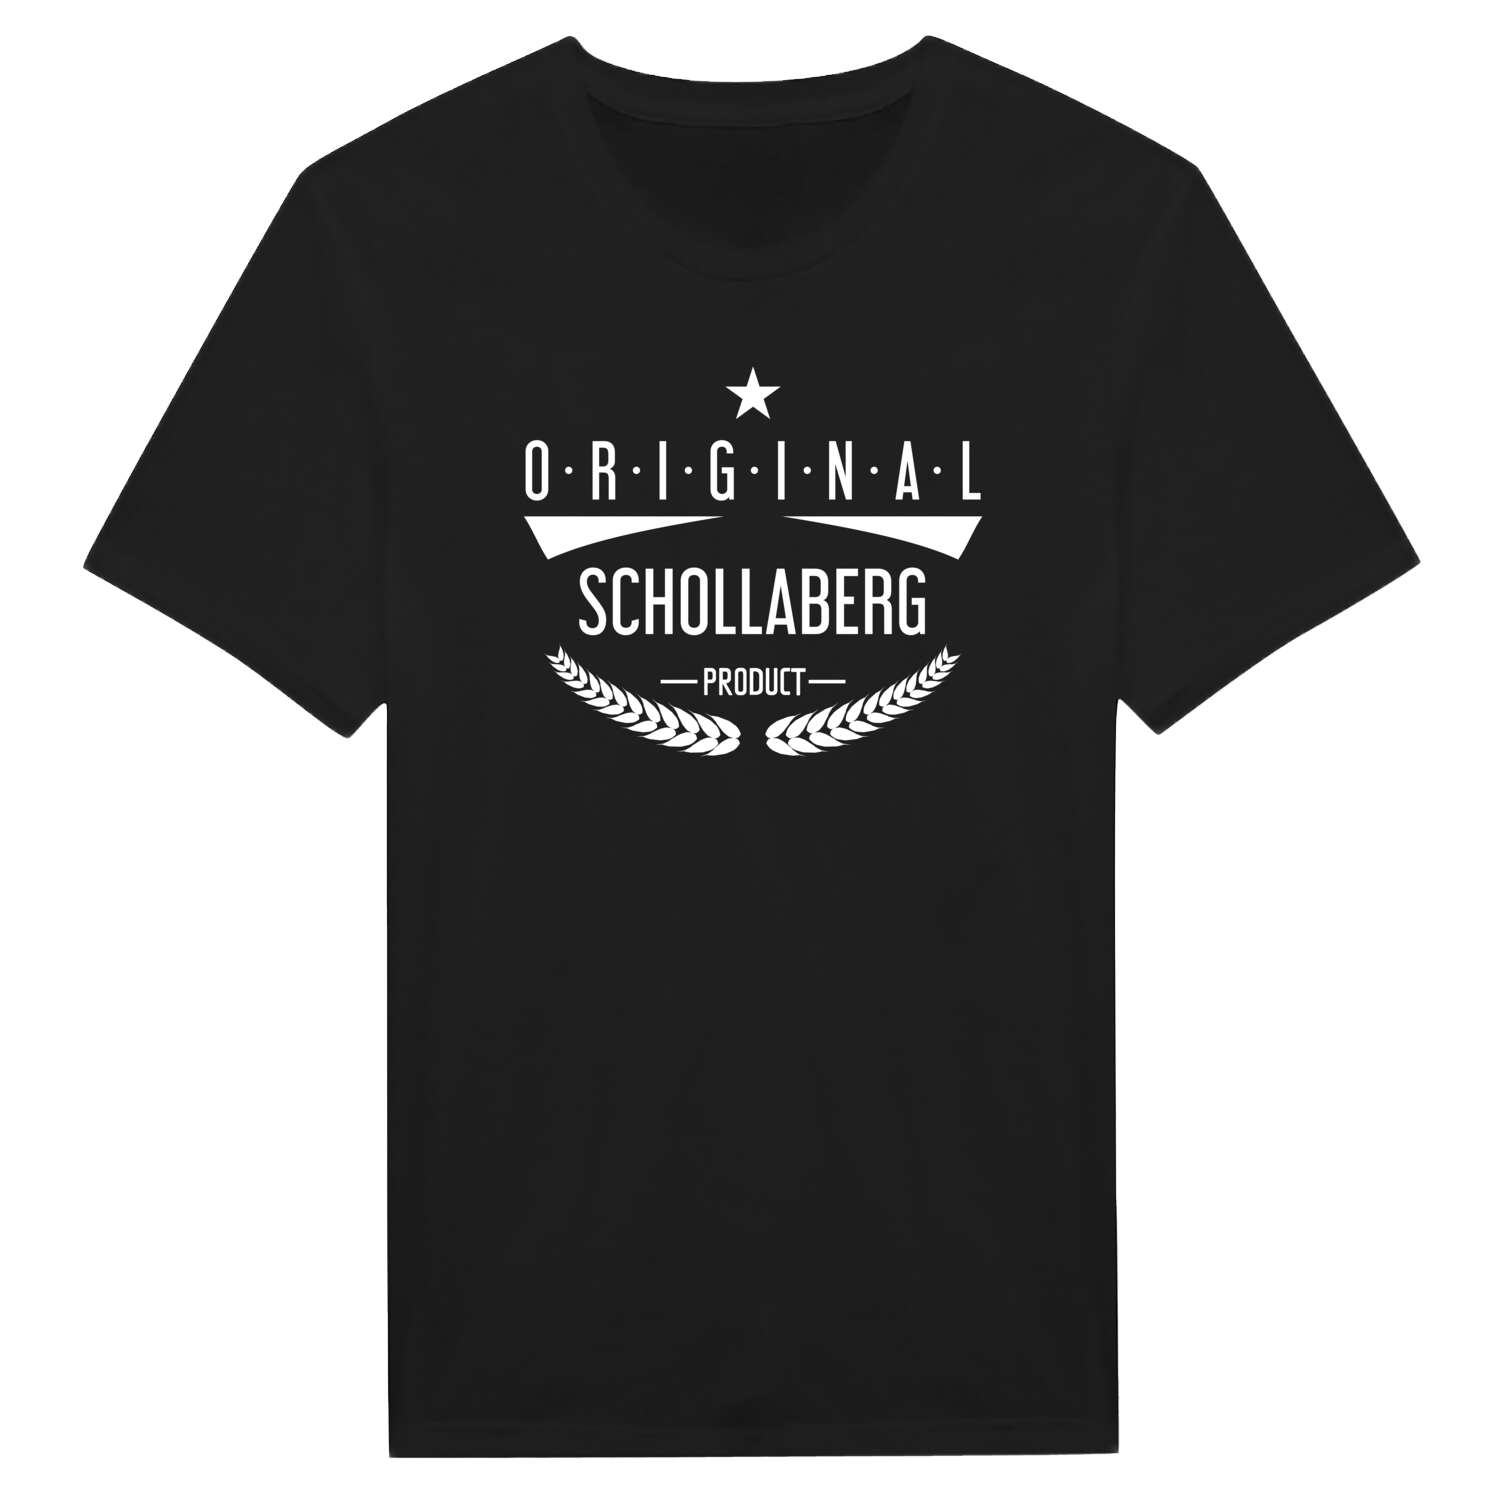 Schollaberg T-Shirt »Original Product«